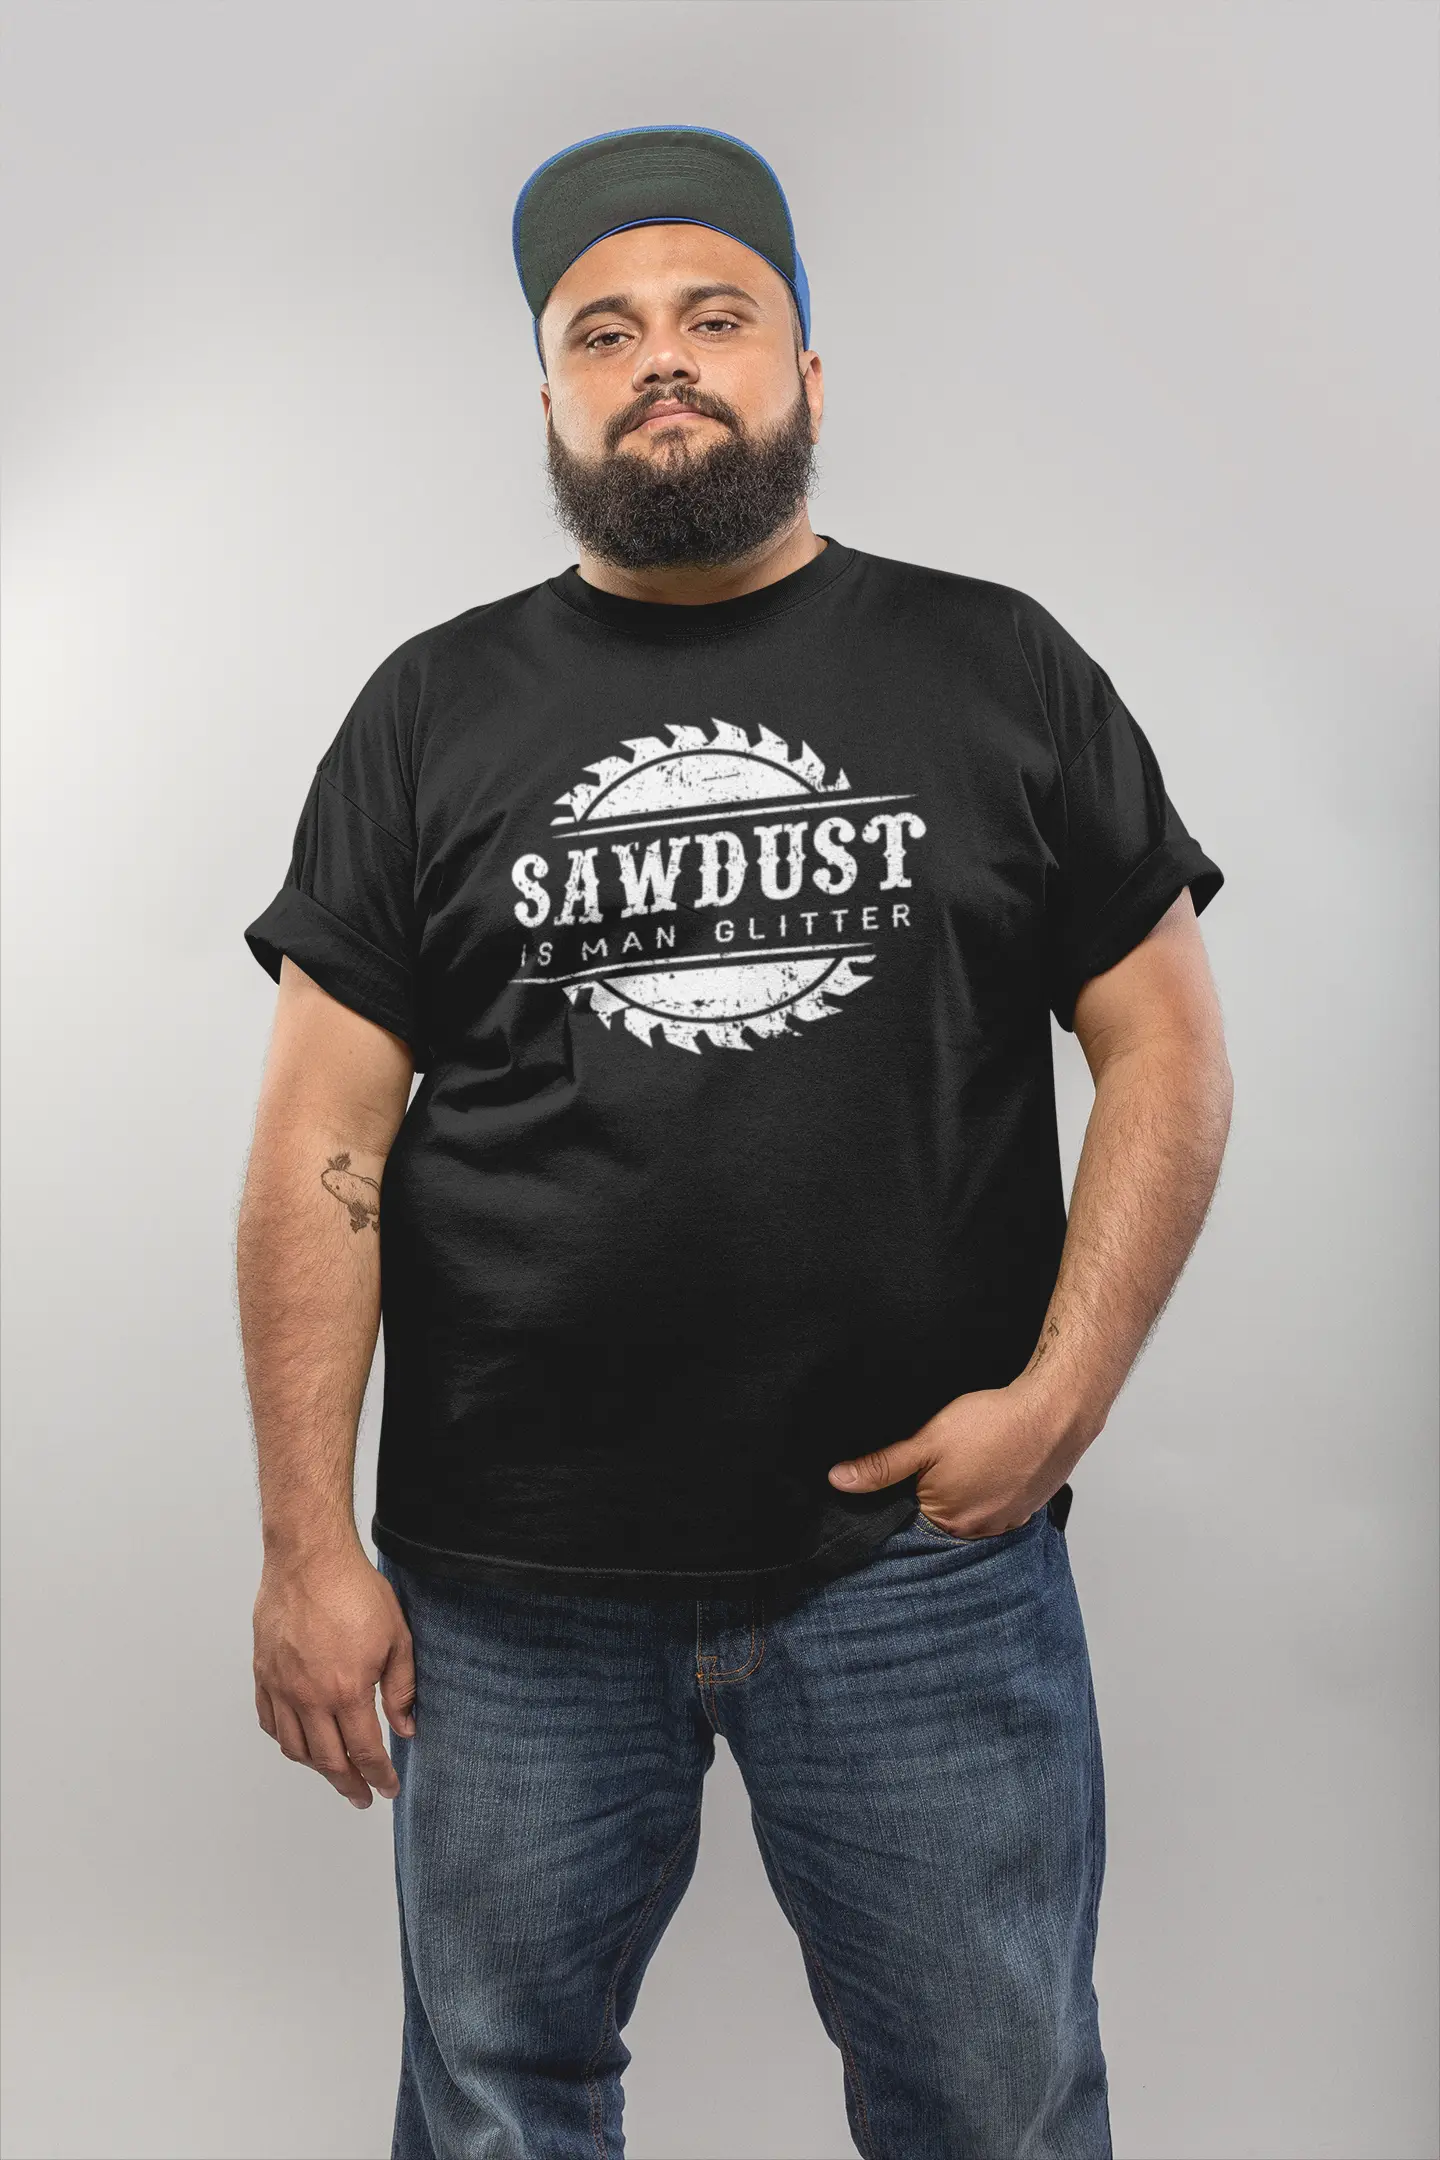 Sawdust Is Man Glitter Tshirt - Donkey Tees